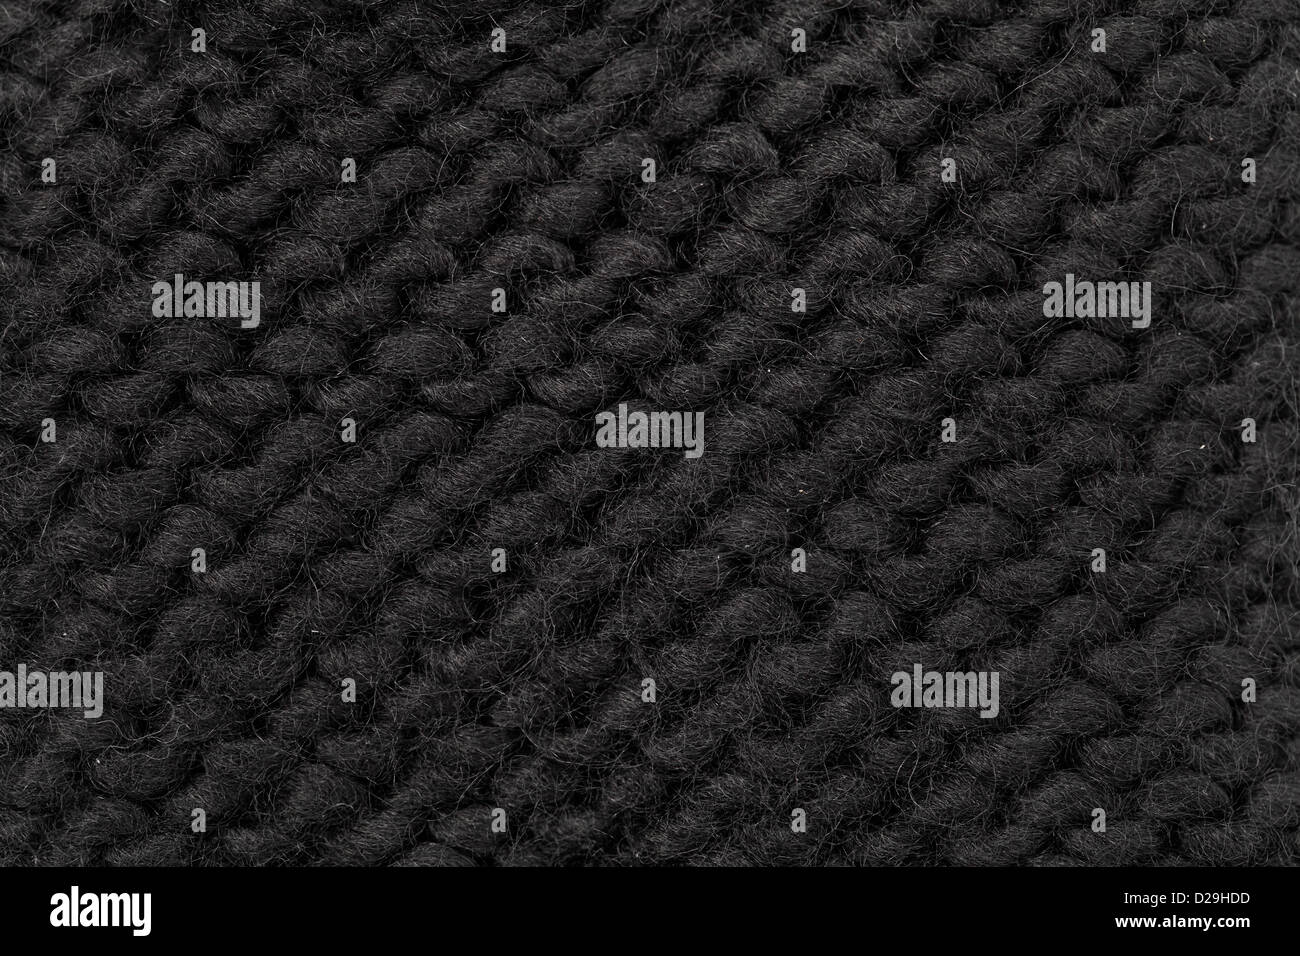 Close-up photo of knitting of black yarn Stock Photo